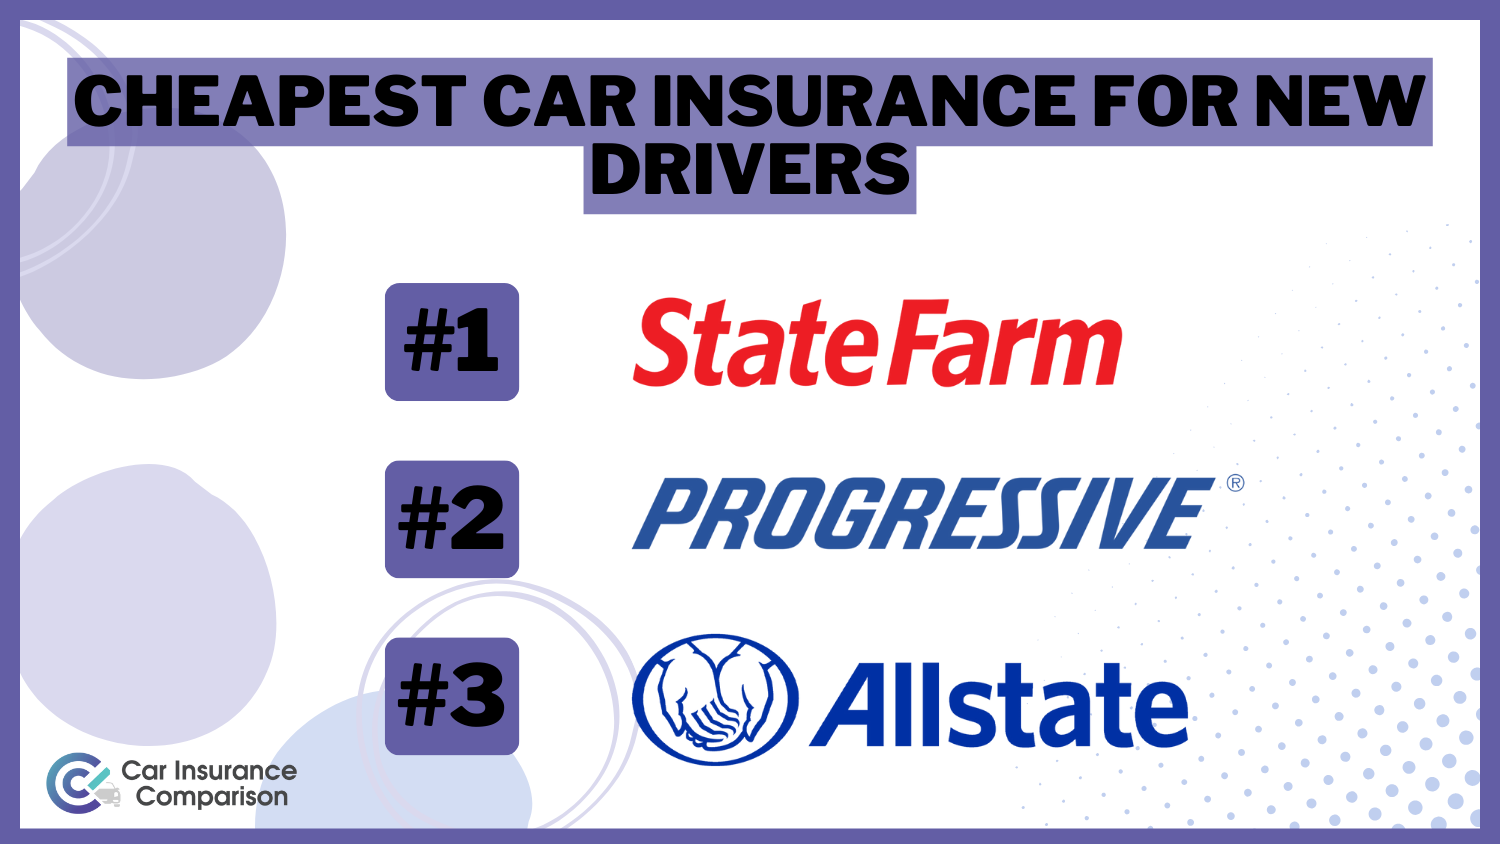 Car Insurance for New Drivers: State Farm, Progressive, and Allstate